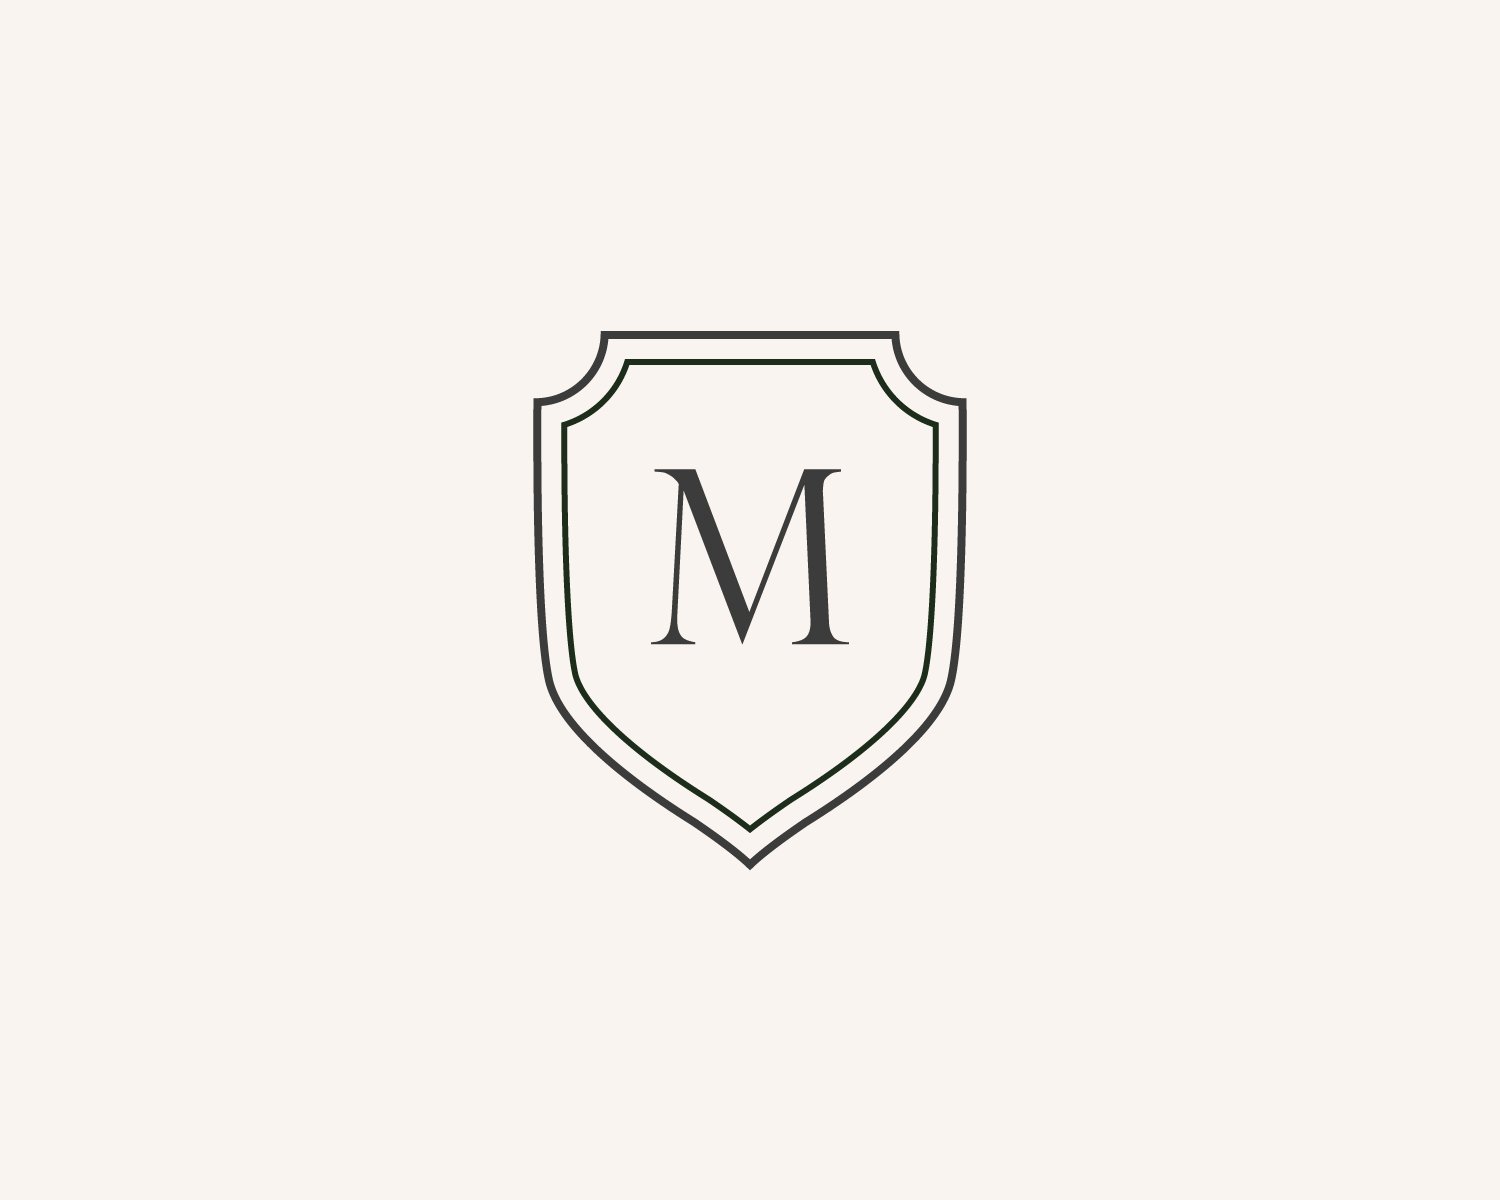 Madrina-Miniature-Cattle-Company-logo-#1B4.jpeg